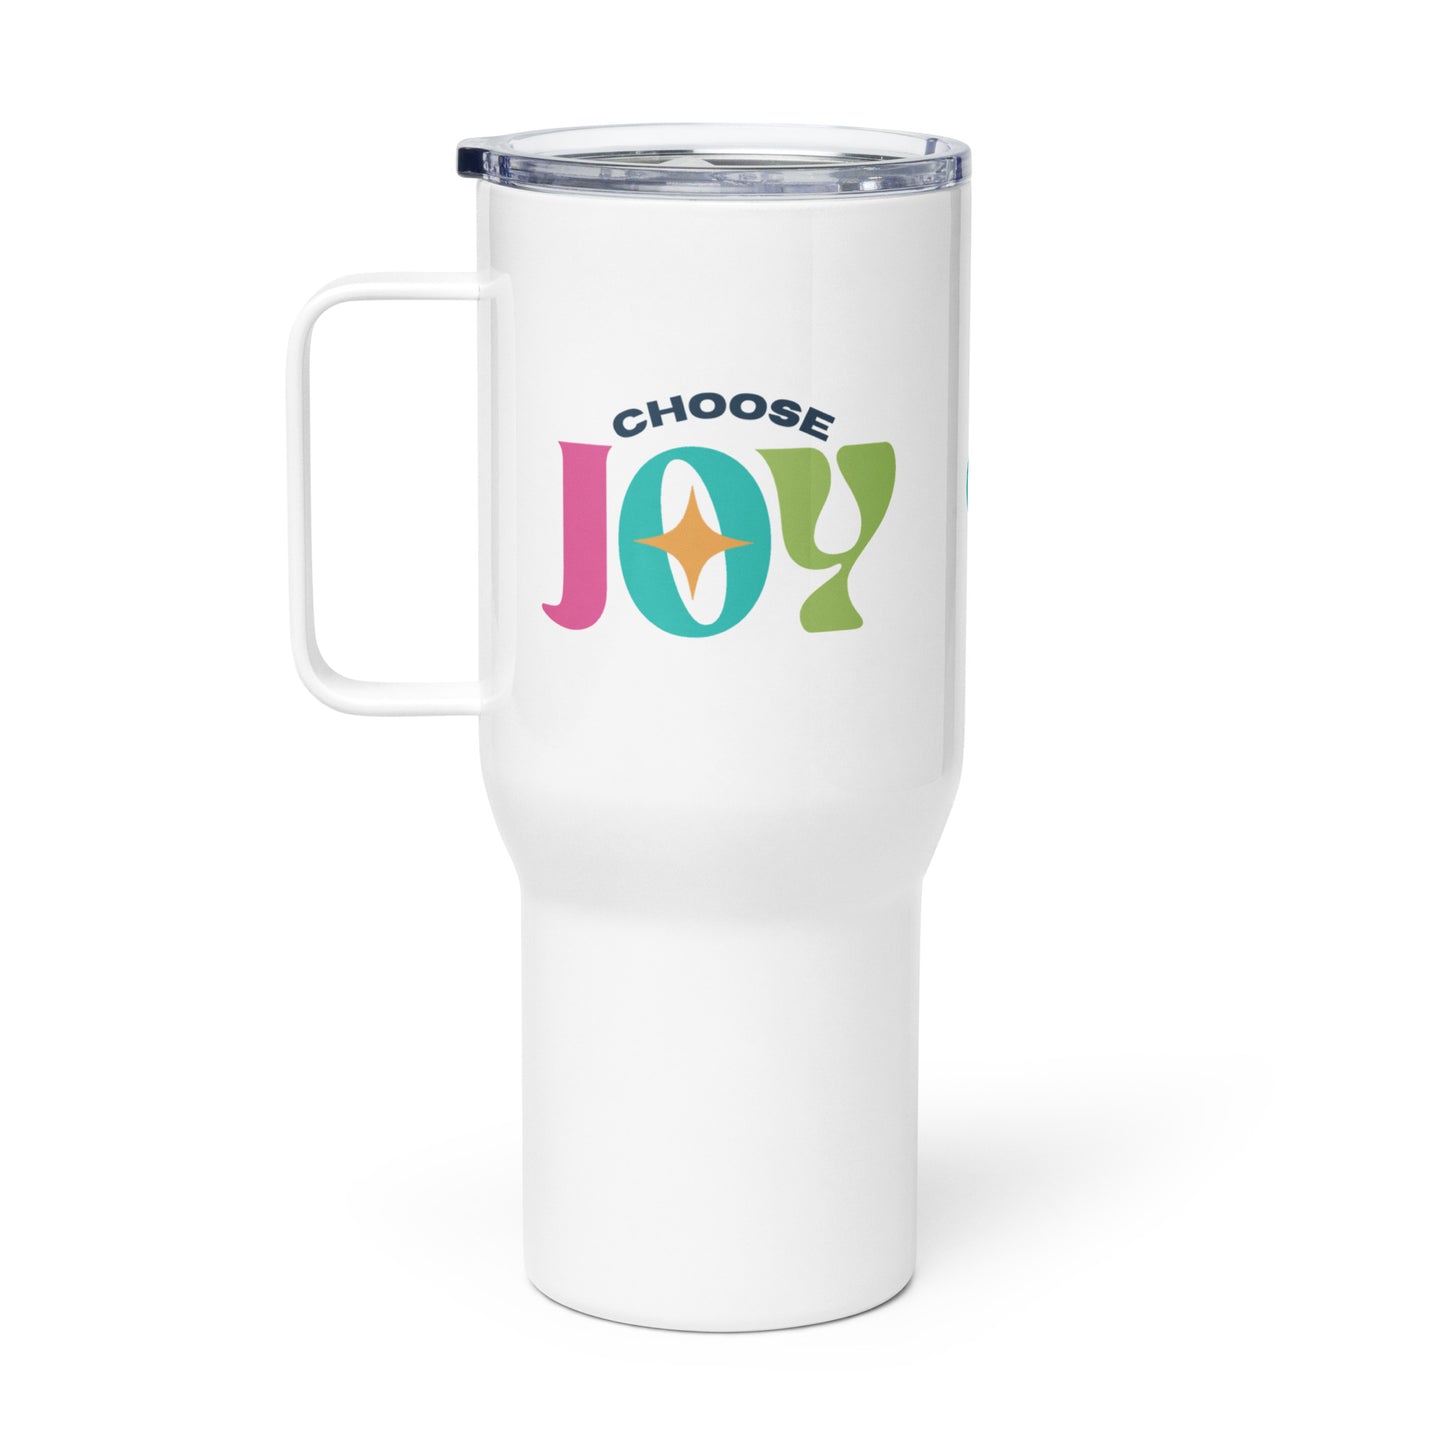 "Choose Joy" Travel mug w/ handle